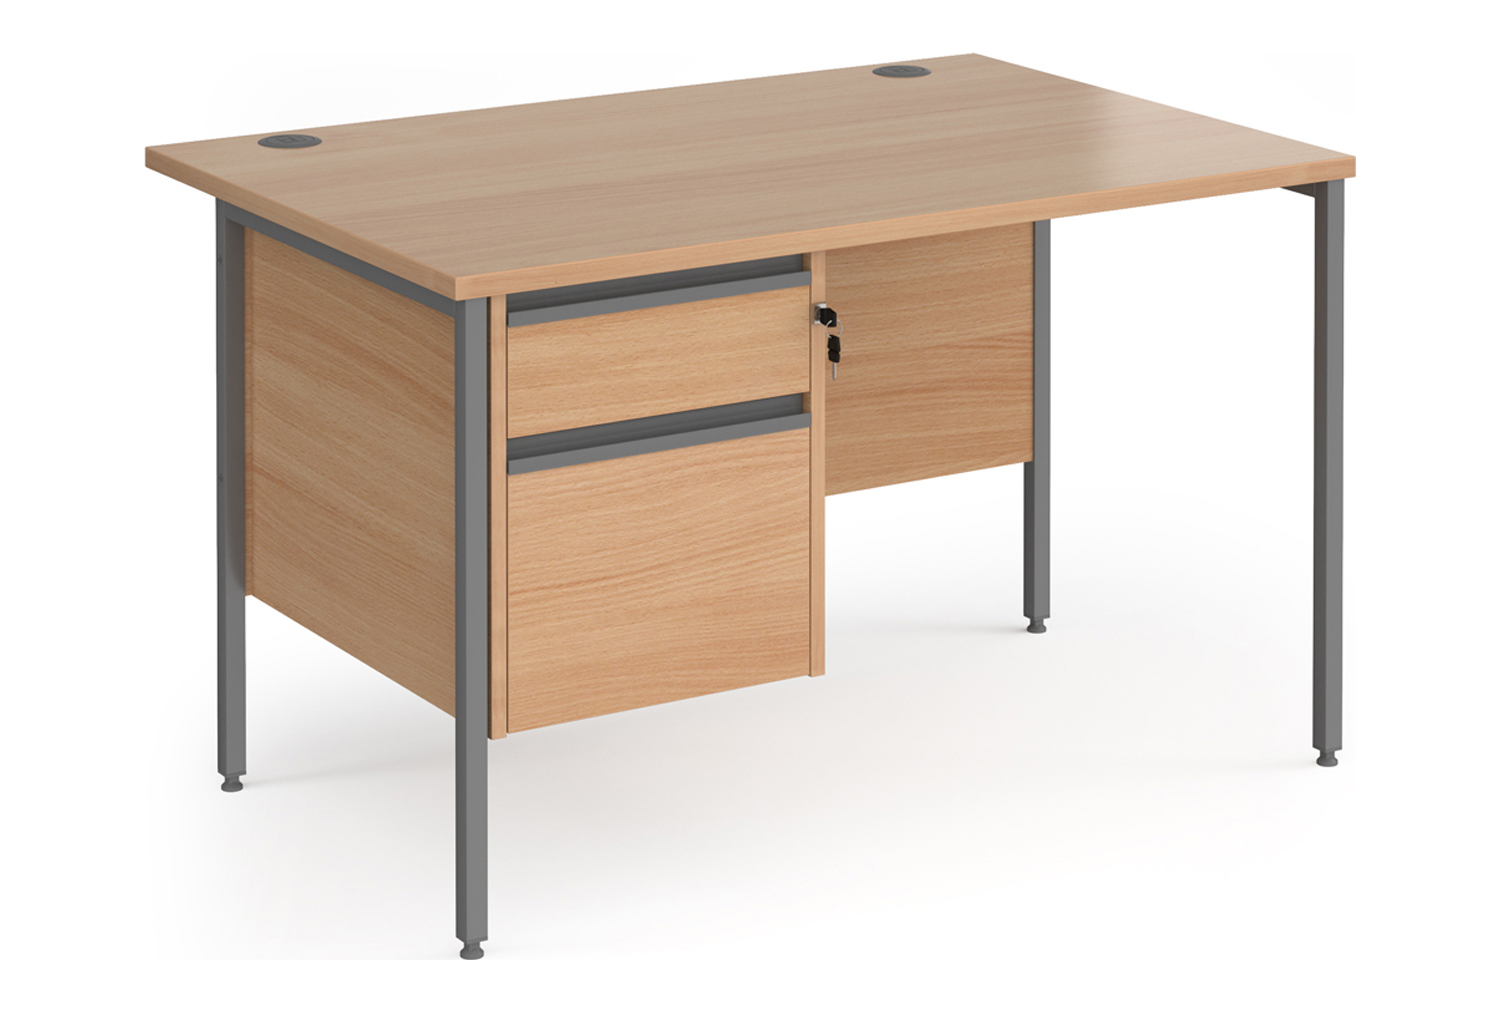 Value Line Classic+ Rectangular H-Leg Office Desk 2 Drawers (Graphite Leg), 120wx80dx73h (cm), Beech